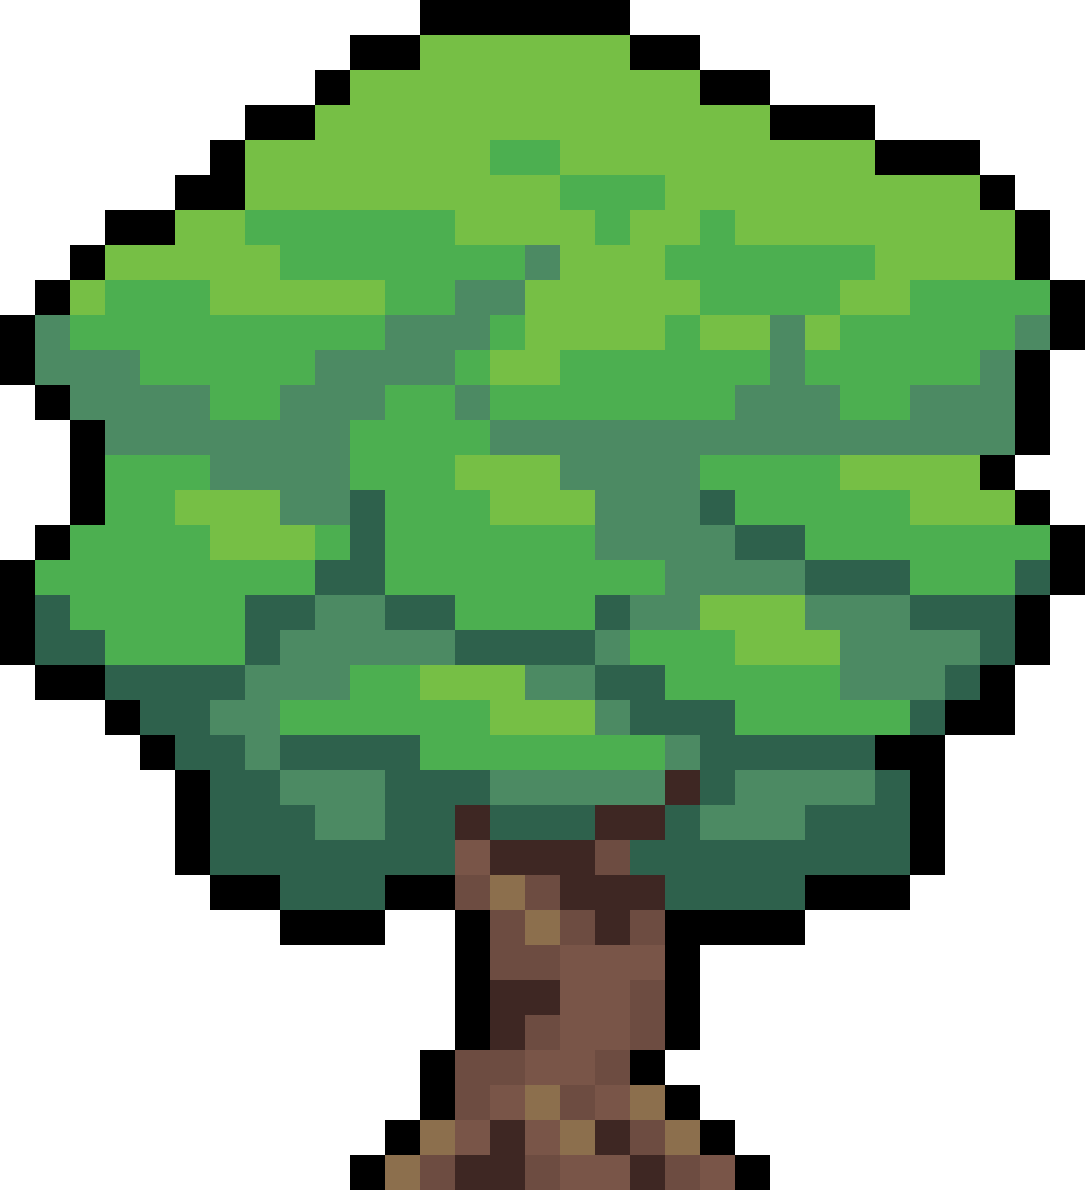 Дерево пиксель арт (68 фото)